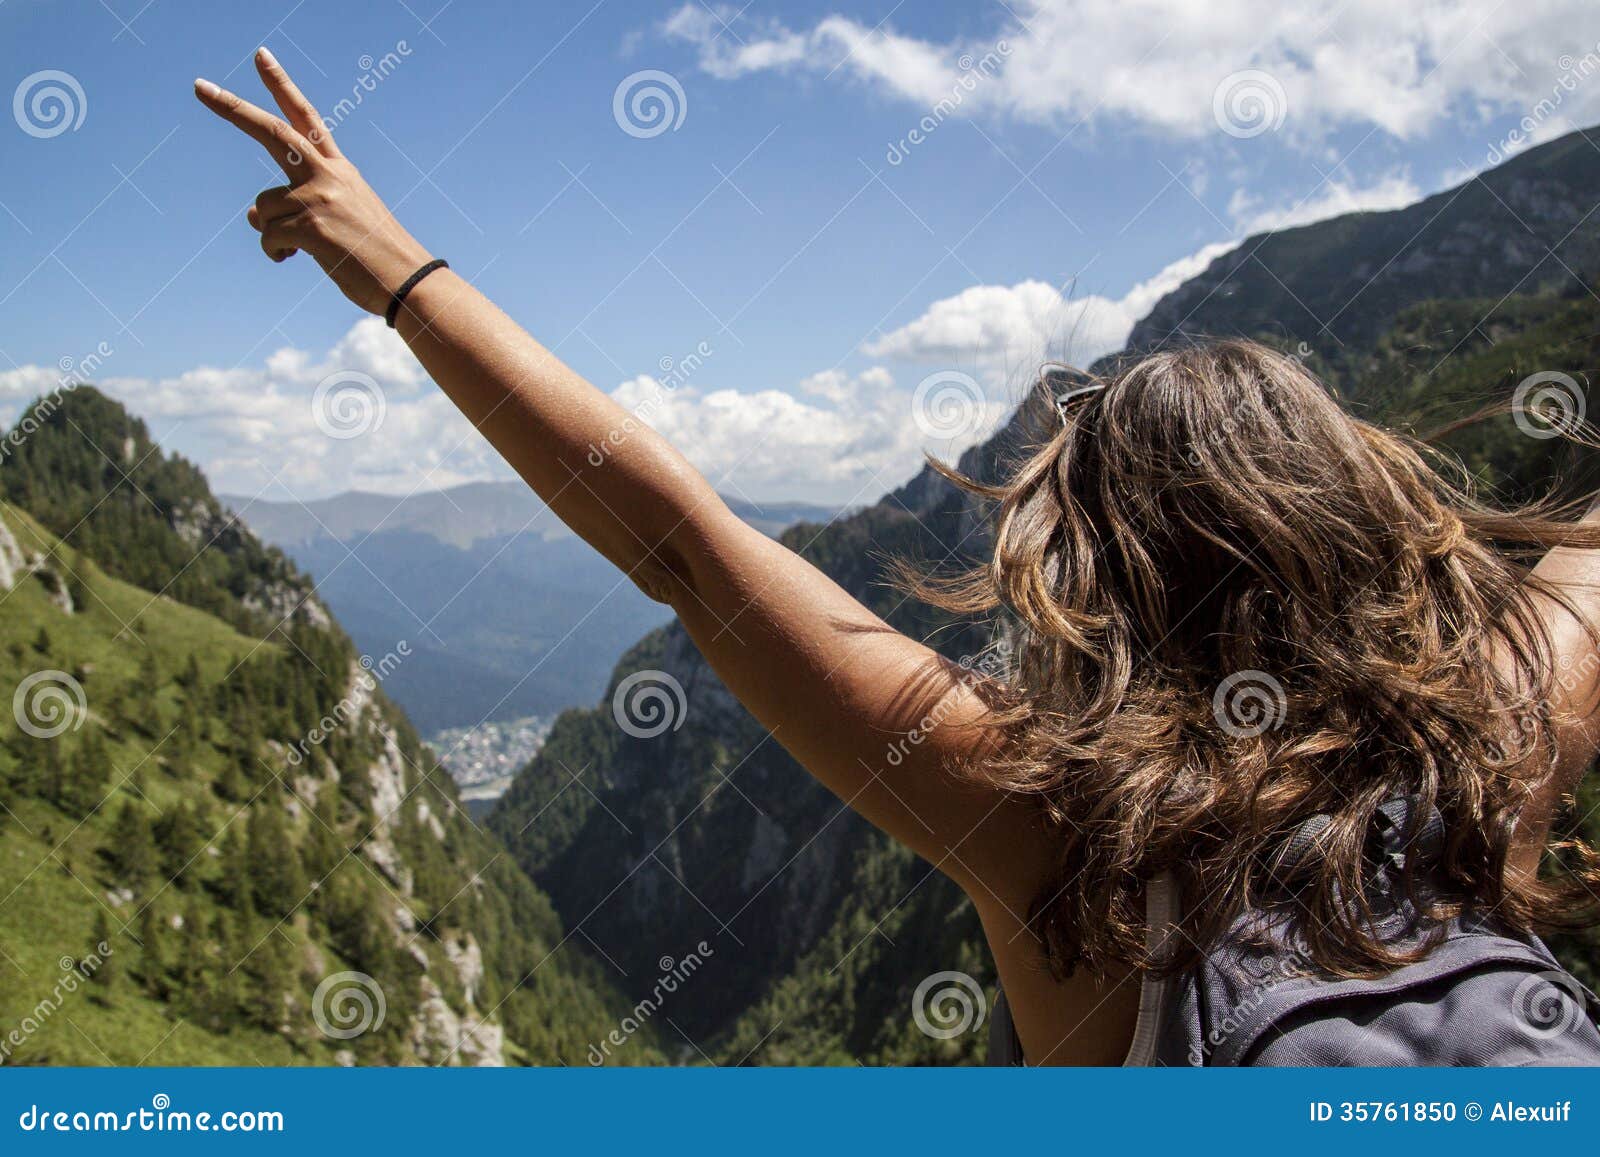 happy woman on mountain hike